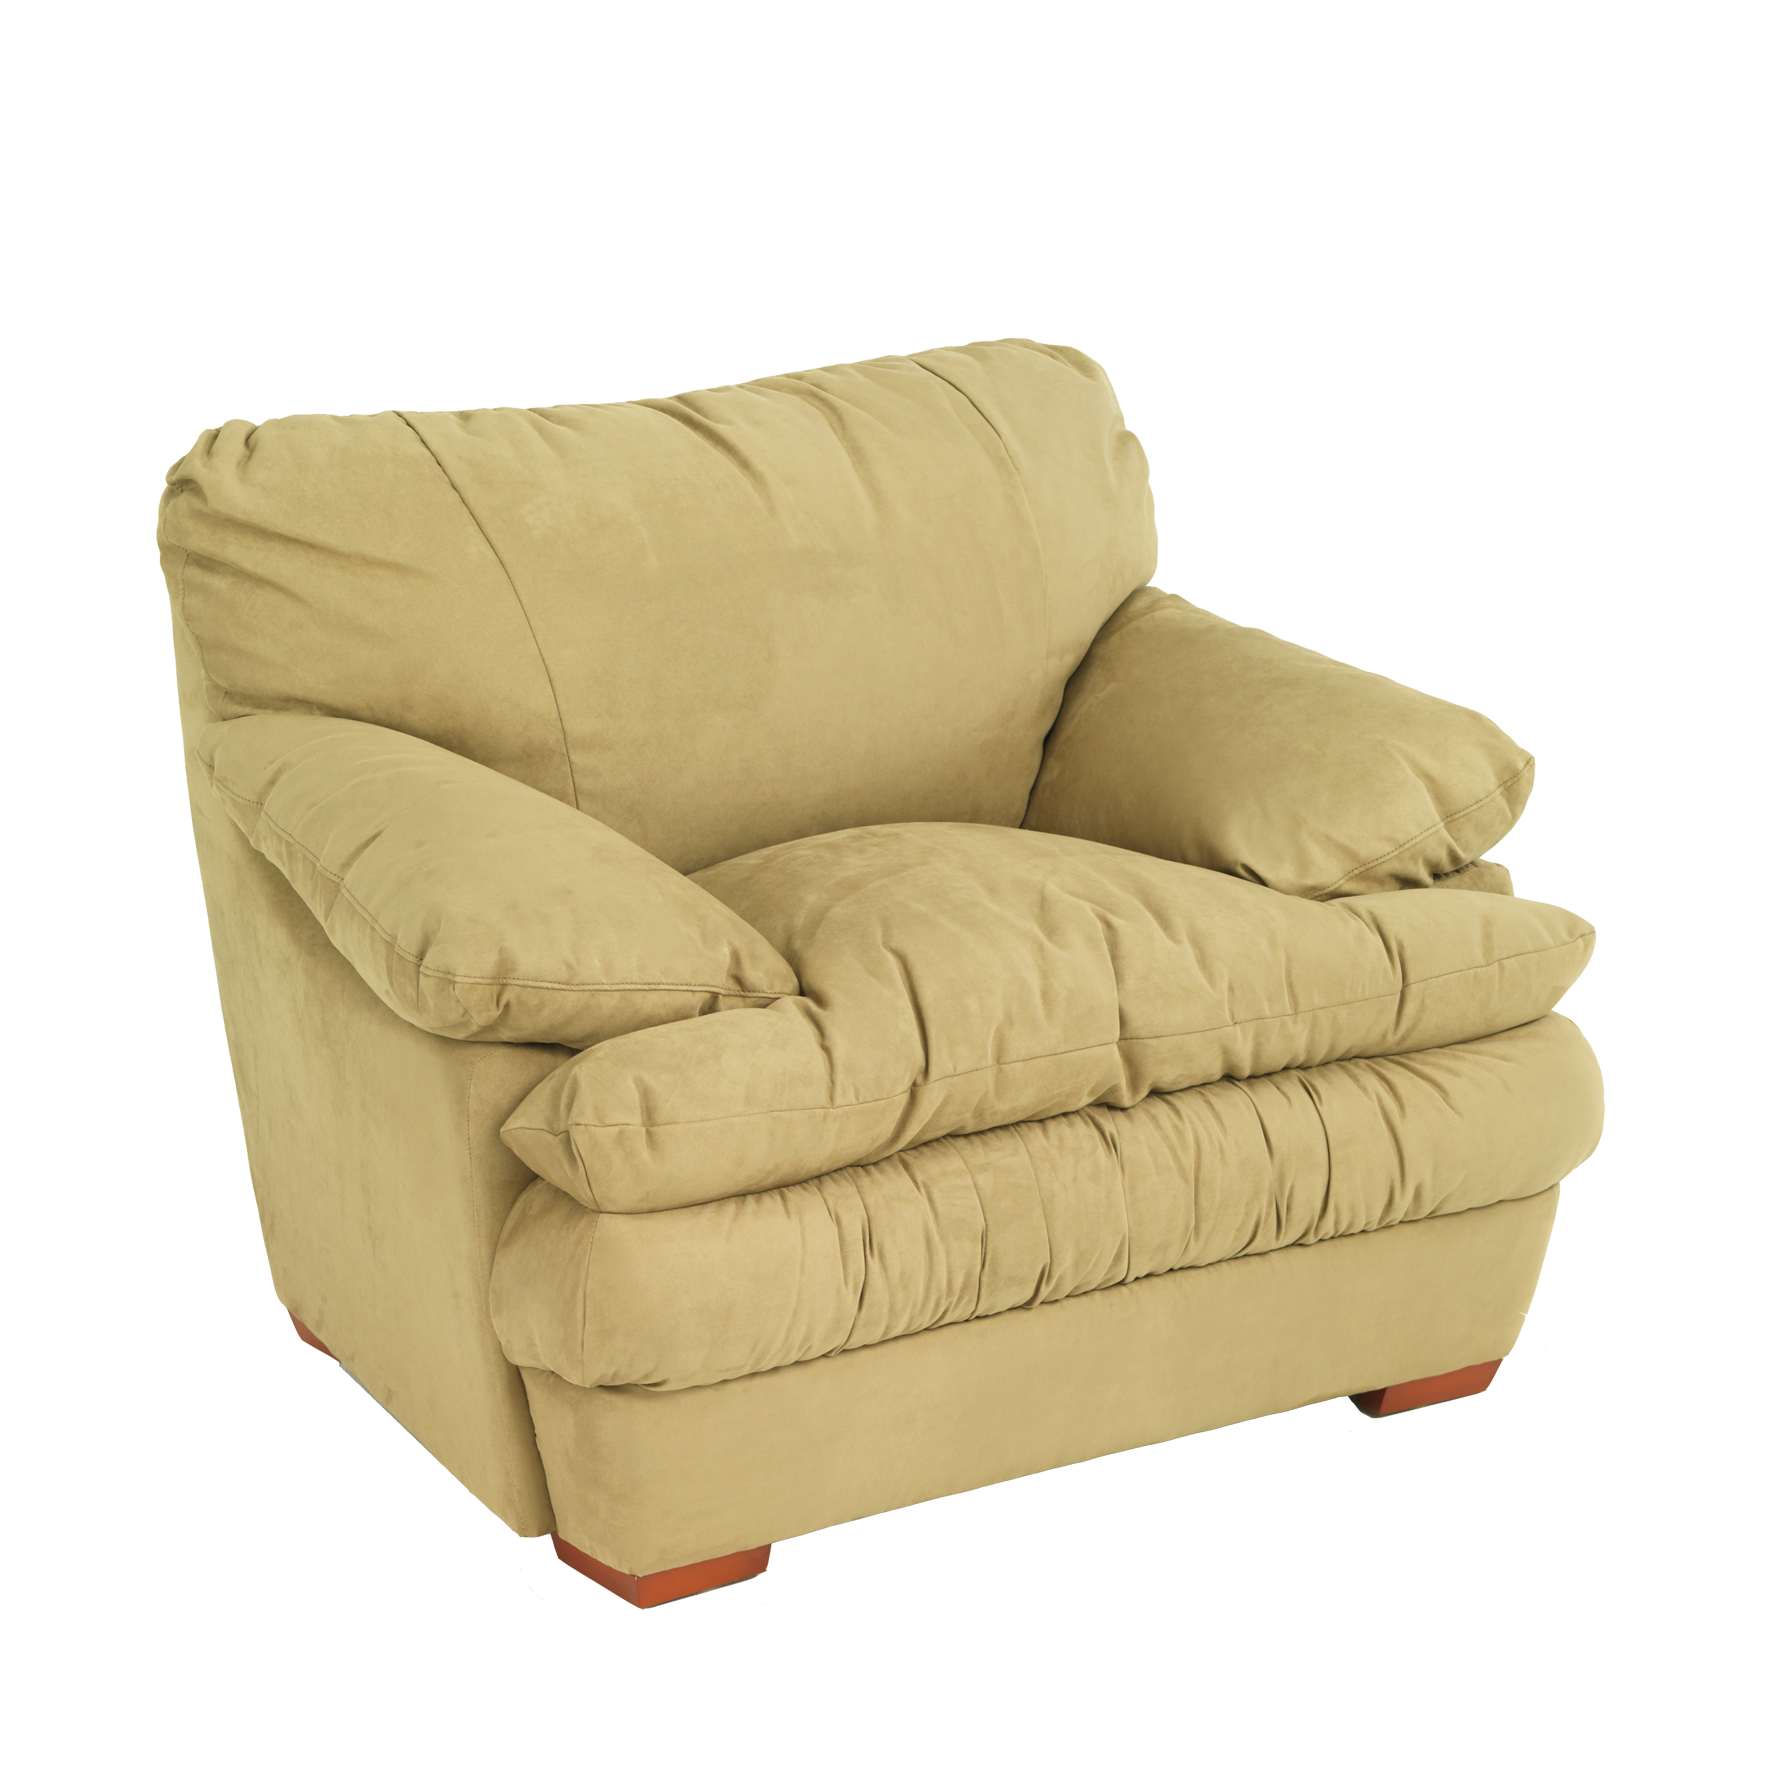 Poltroncina per divano singolo